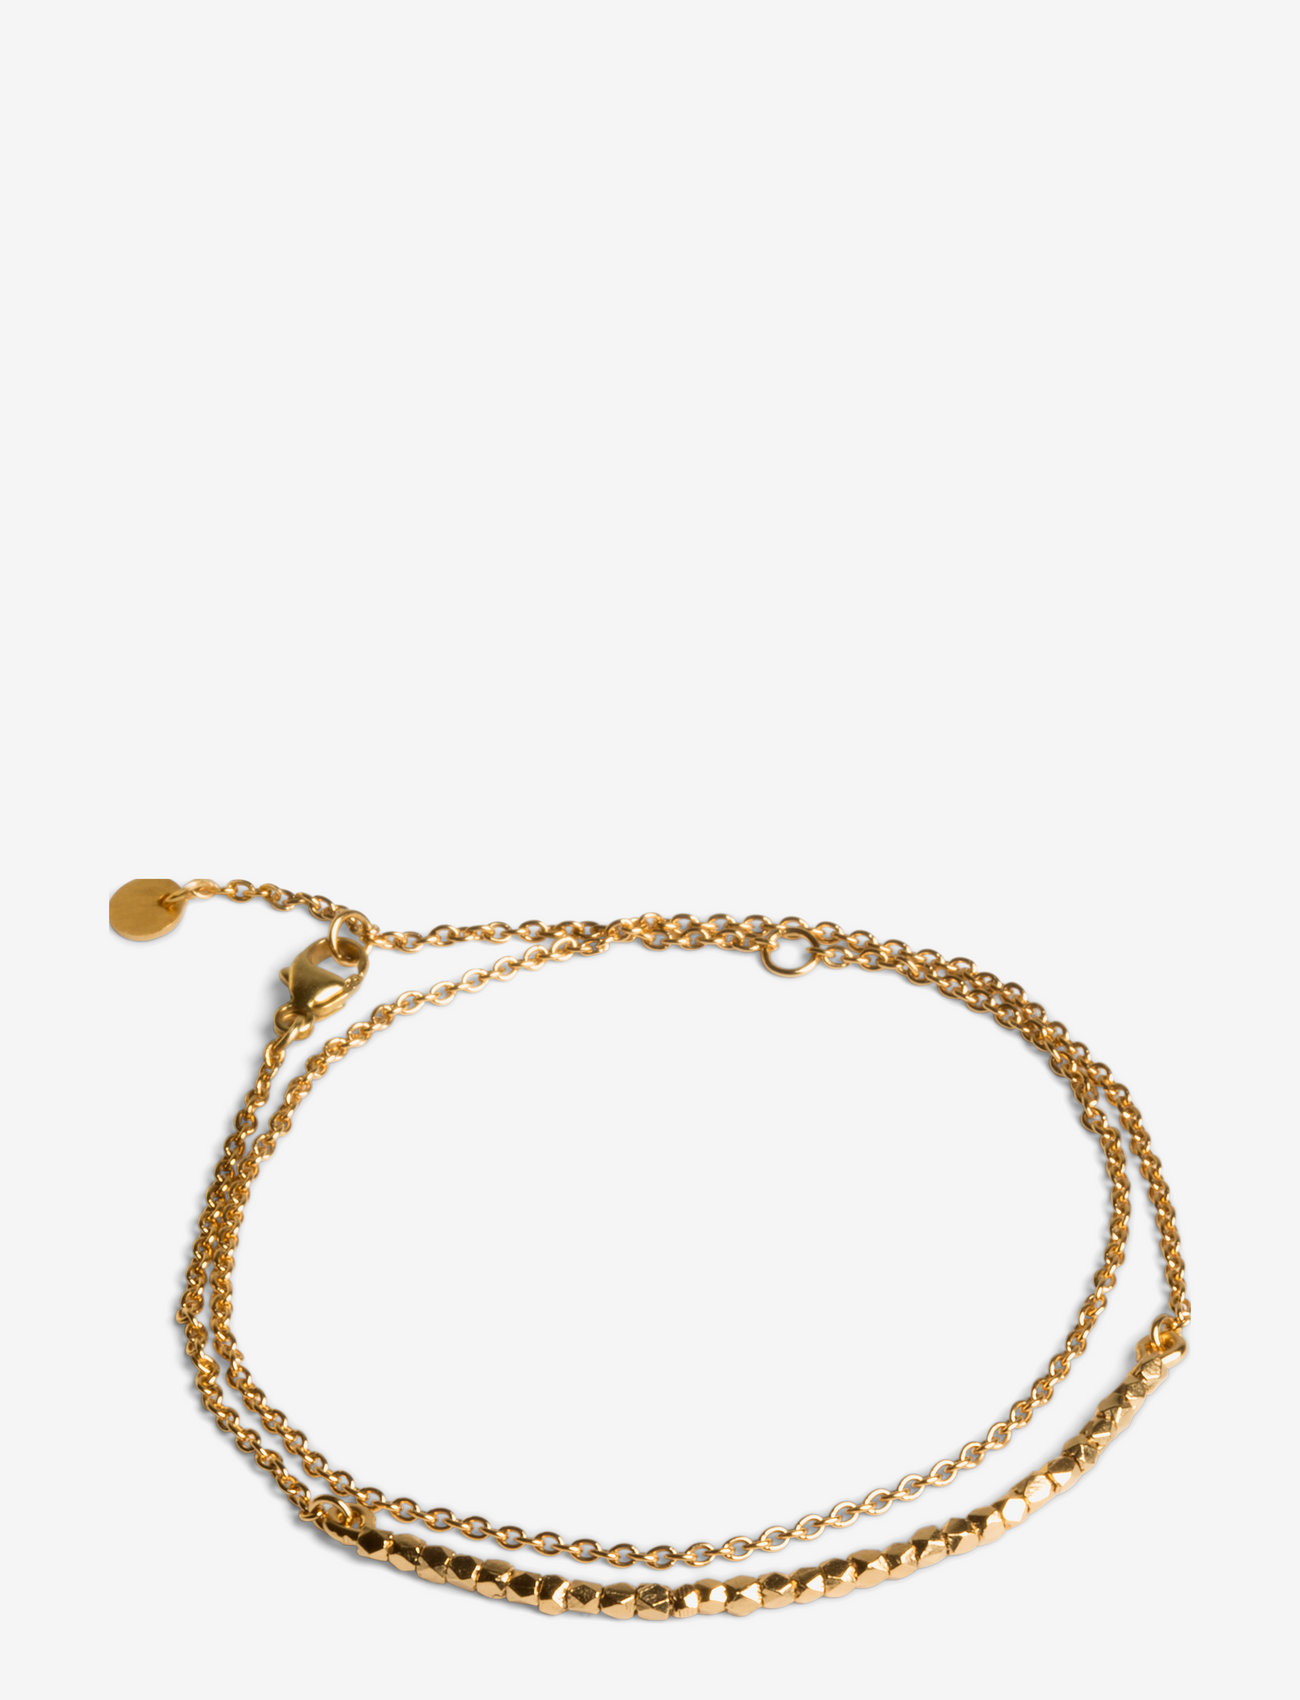 Jane Koenig Bead Bracelet With Chain Smykker | Boozt.com